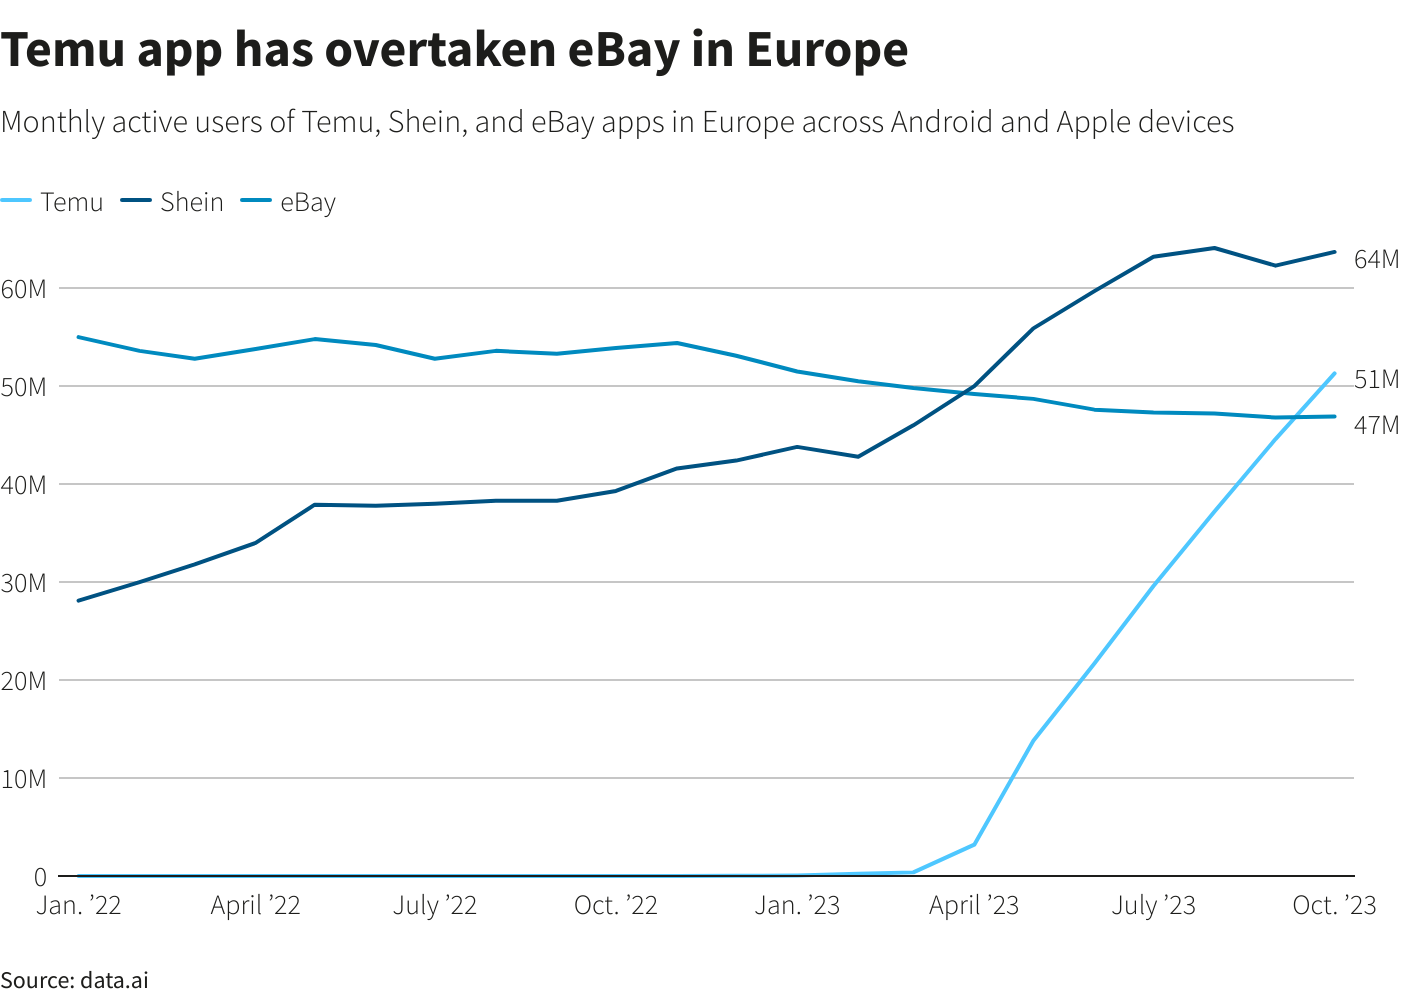 In Europe, the Temu app overtook eBay. Source: Data.ai